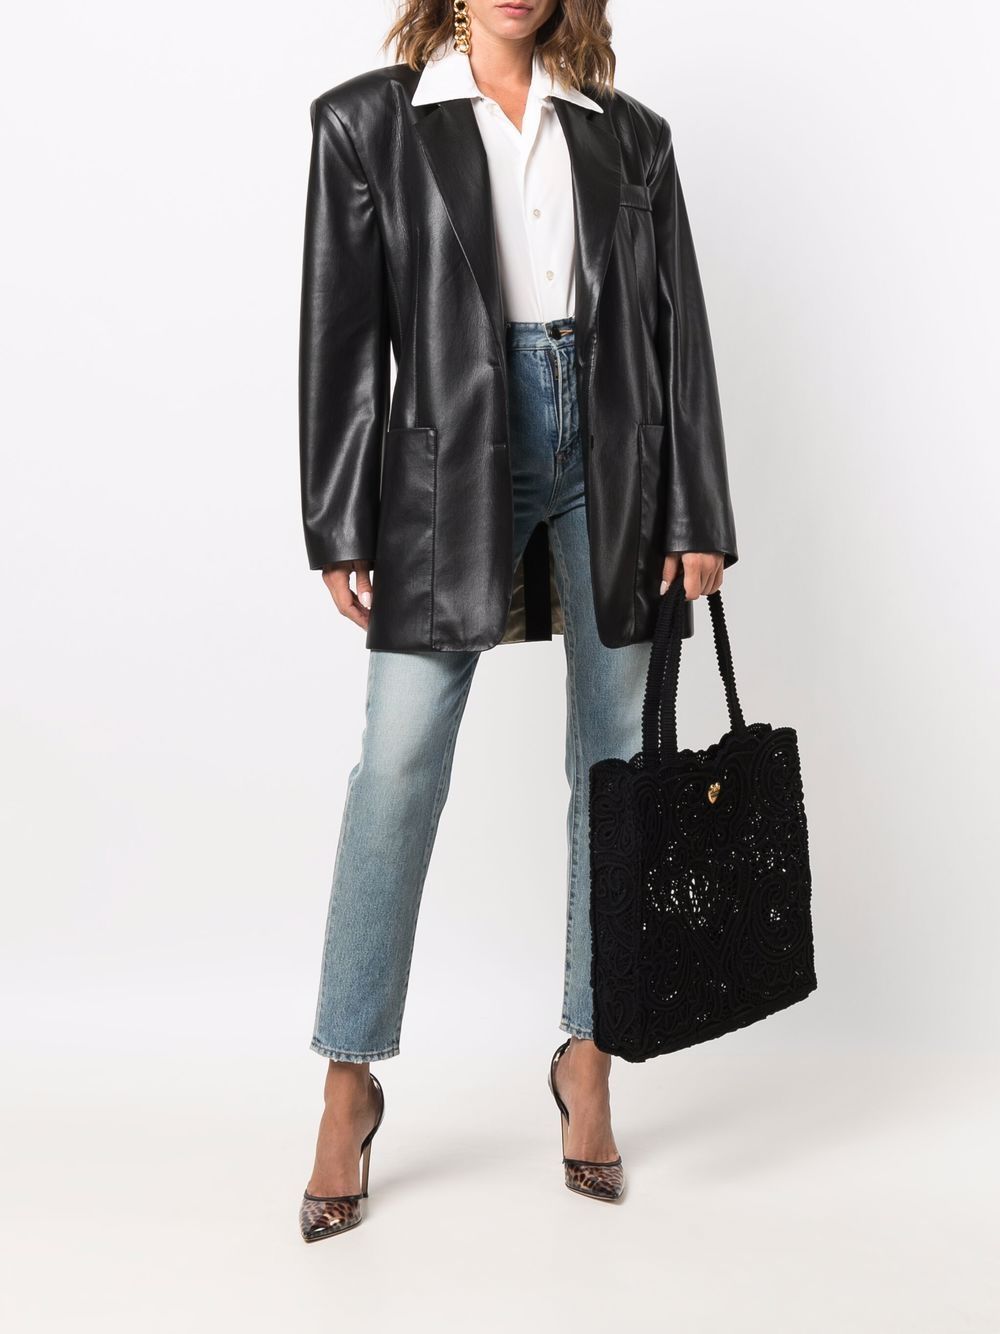 Shop Dolce & Gabbana Medium Beatrice Cordonetto Lace Shopper Bag In Black